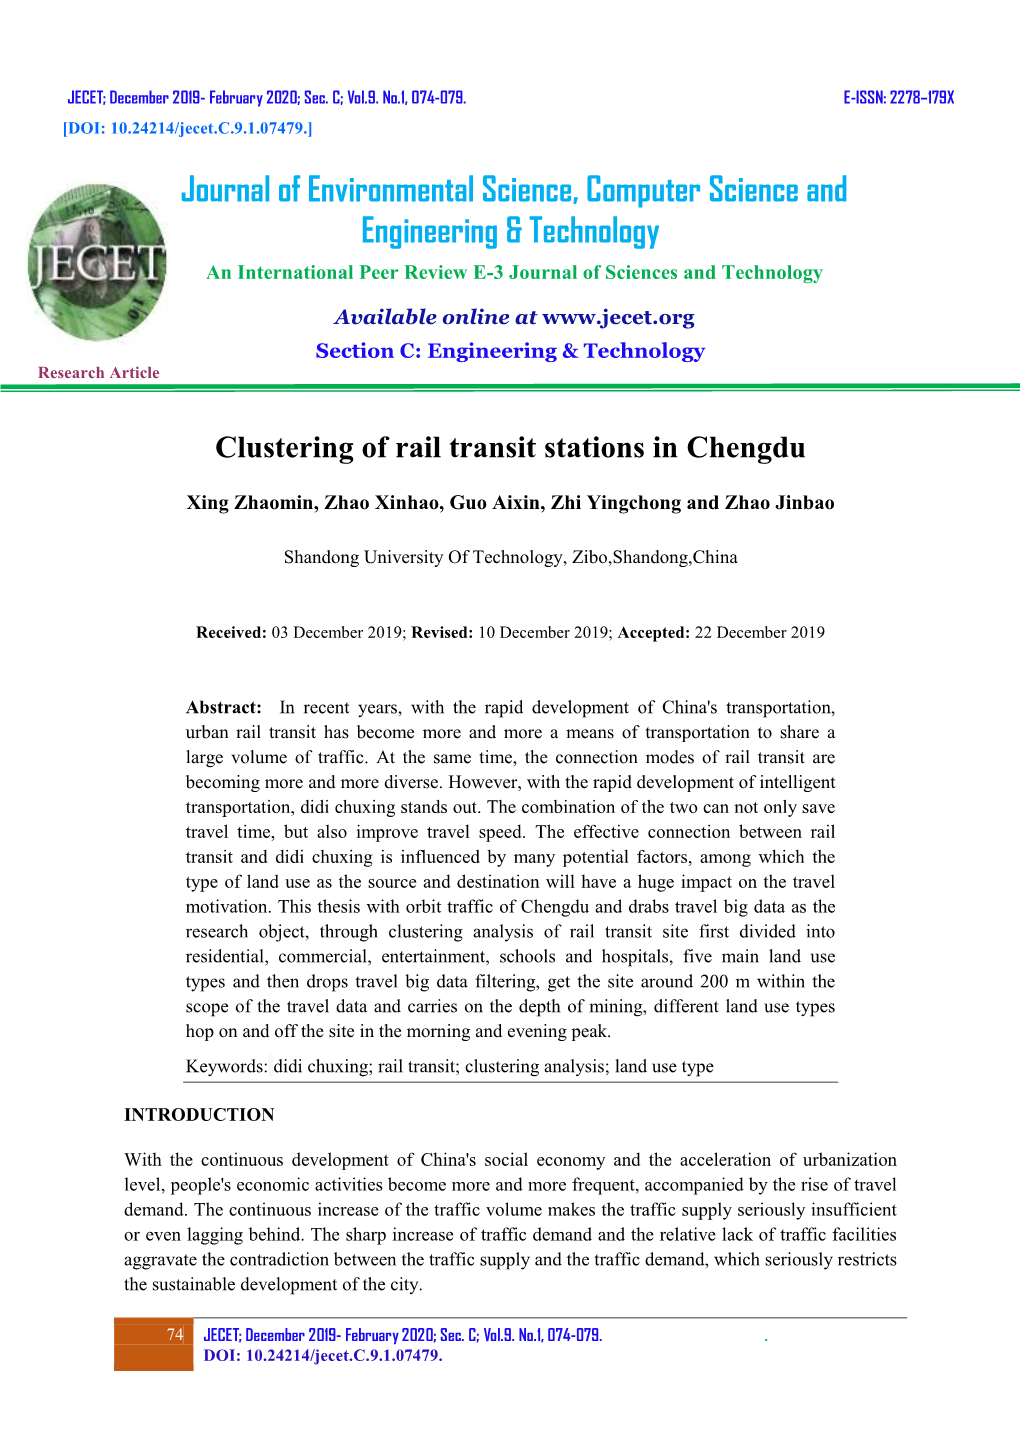 Clustering of Rail Transit Stations in Chengdu